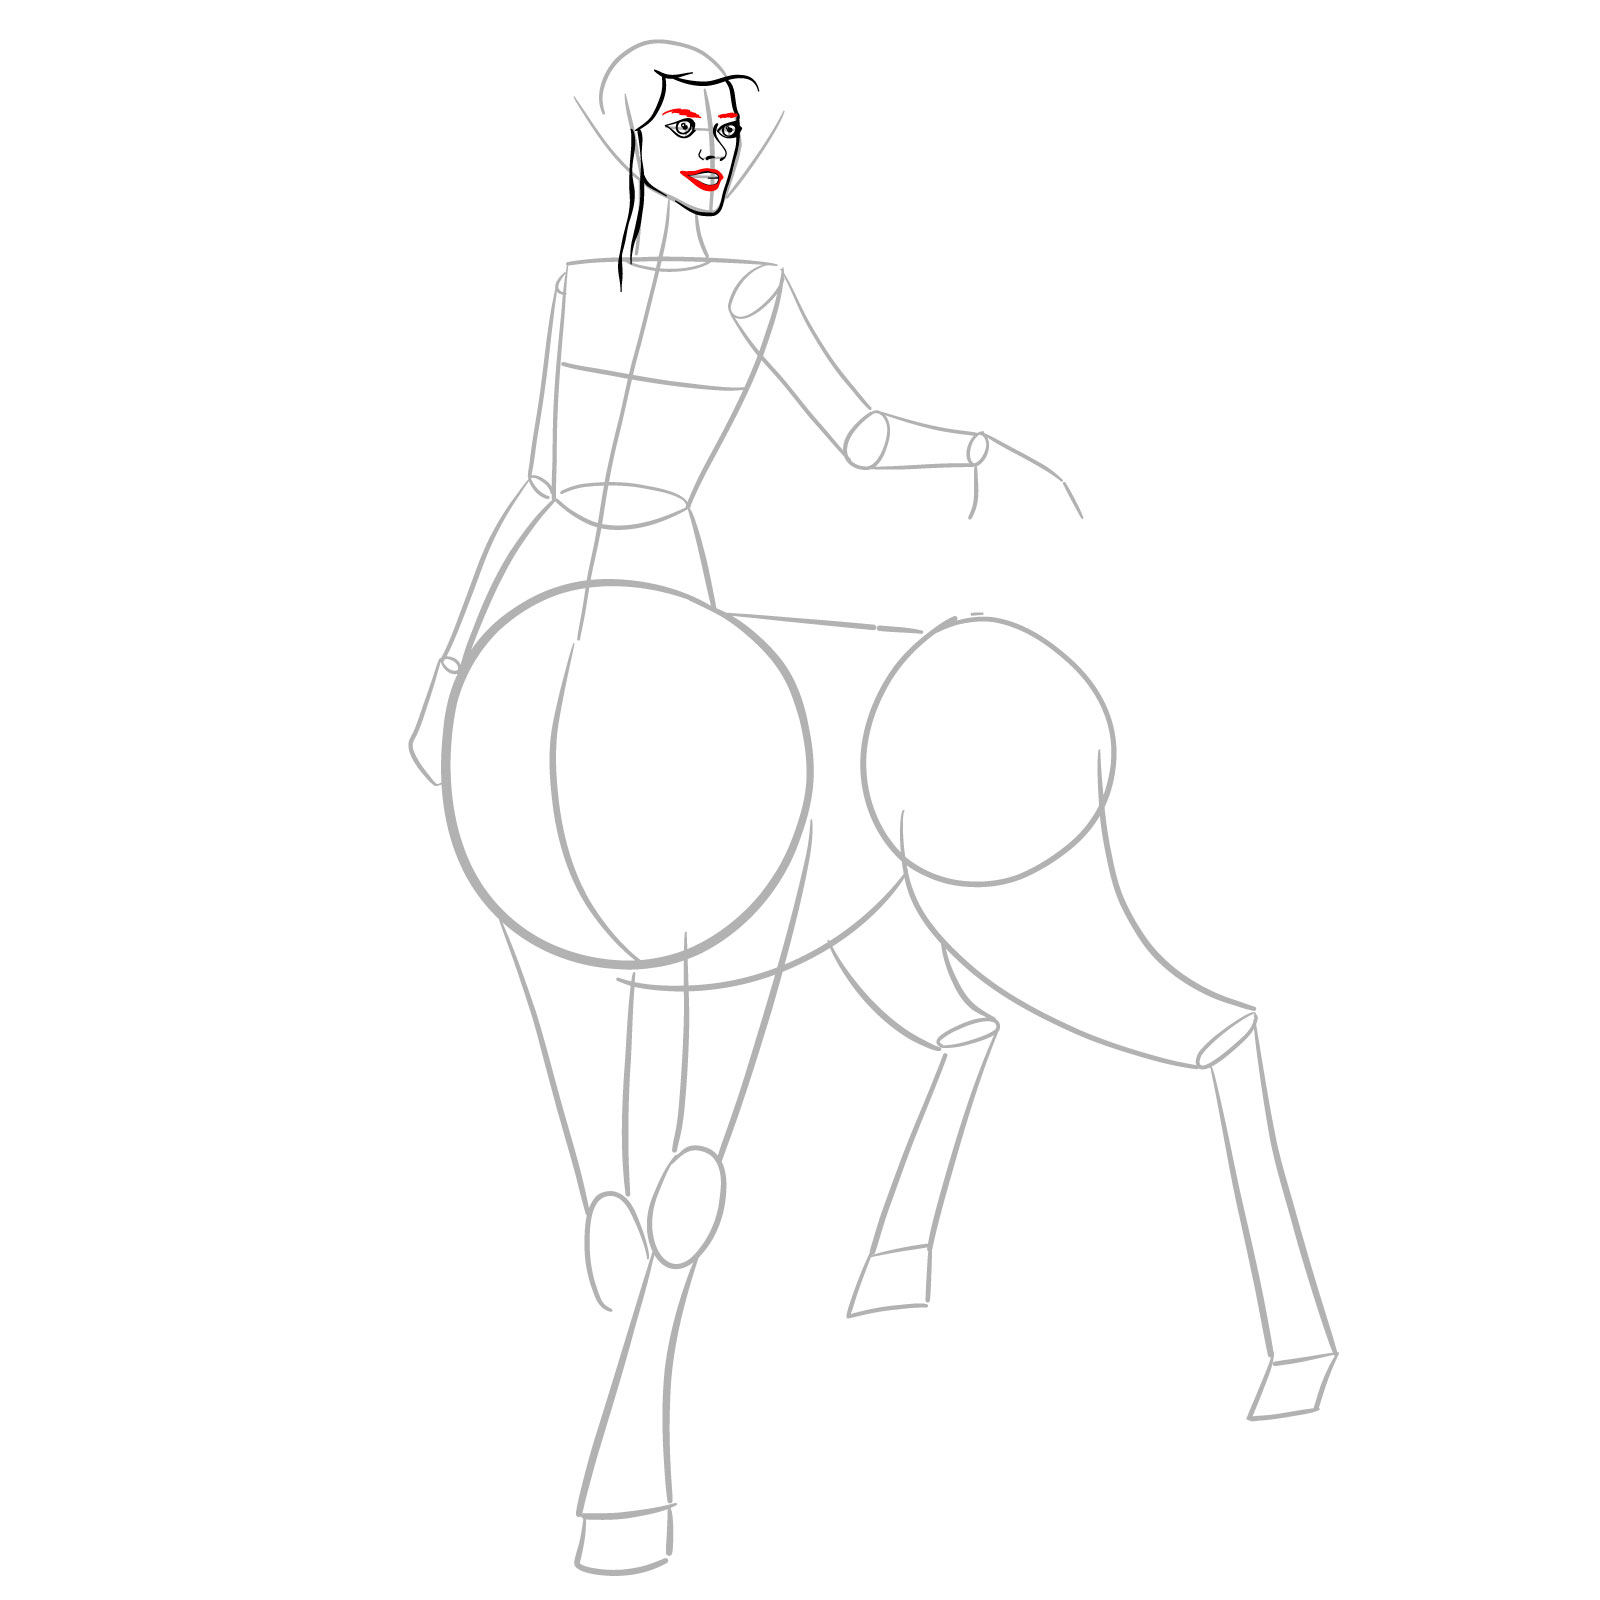 How to draw a Female Centaur - step 11